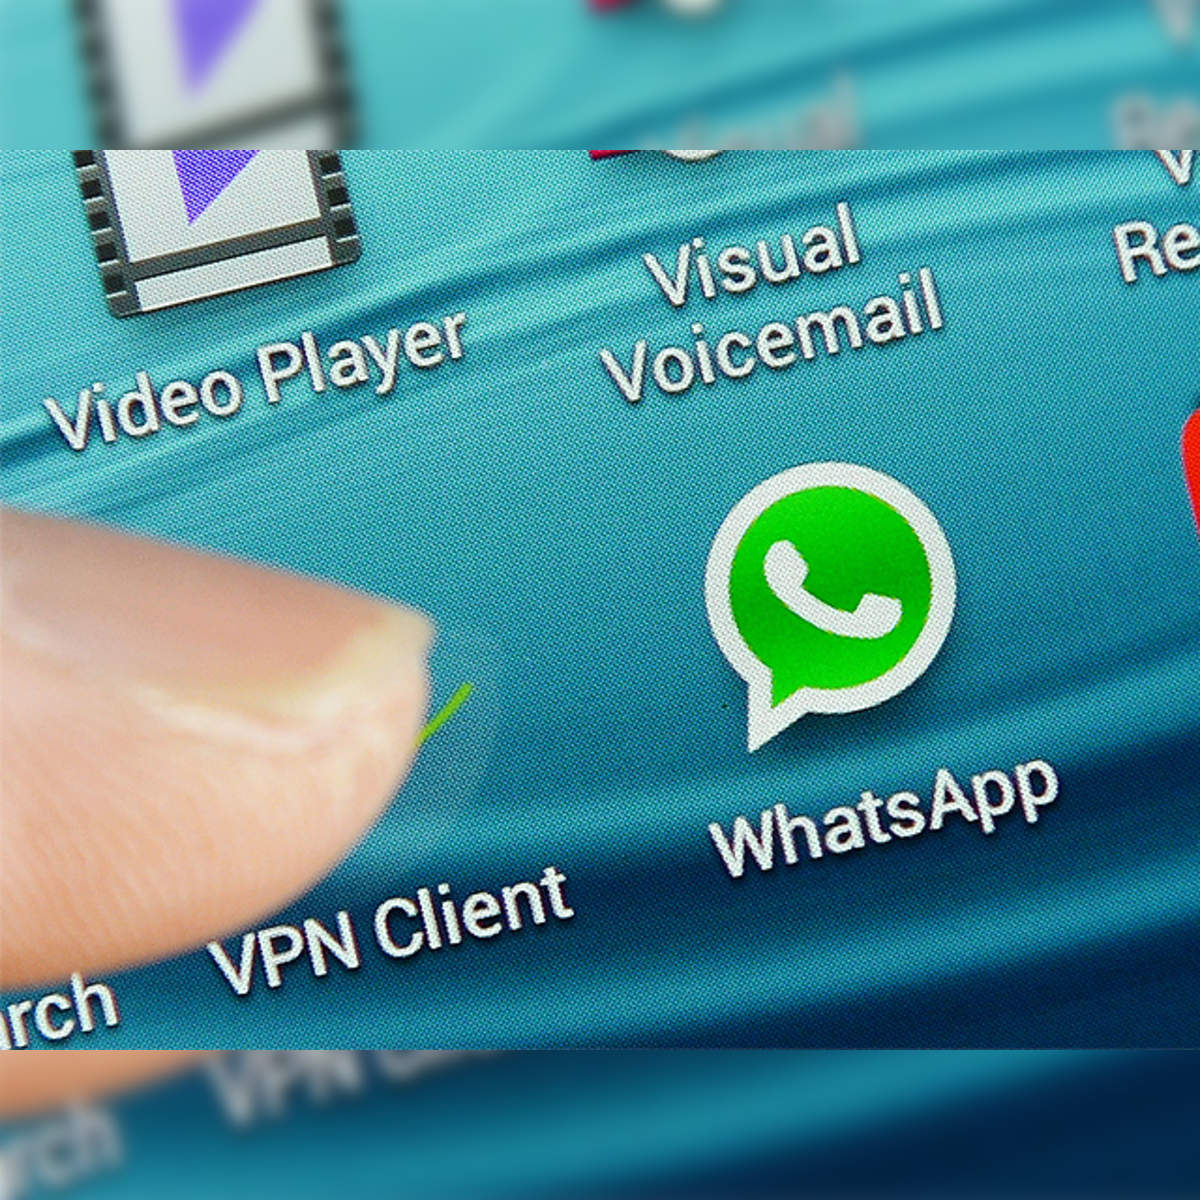 WhatsApp For Mac Vs WhatsApp Web: Which Is Best?